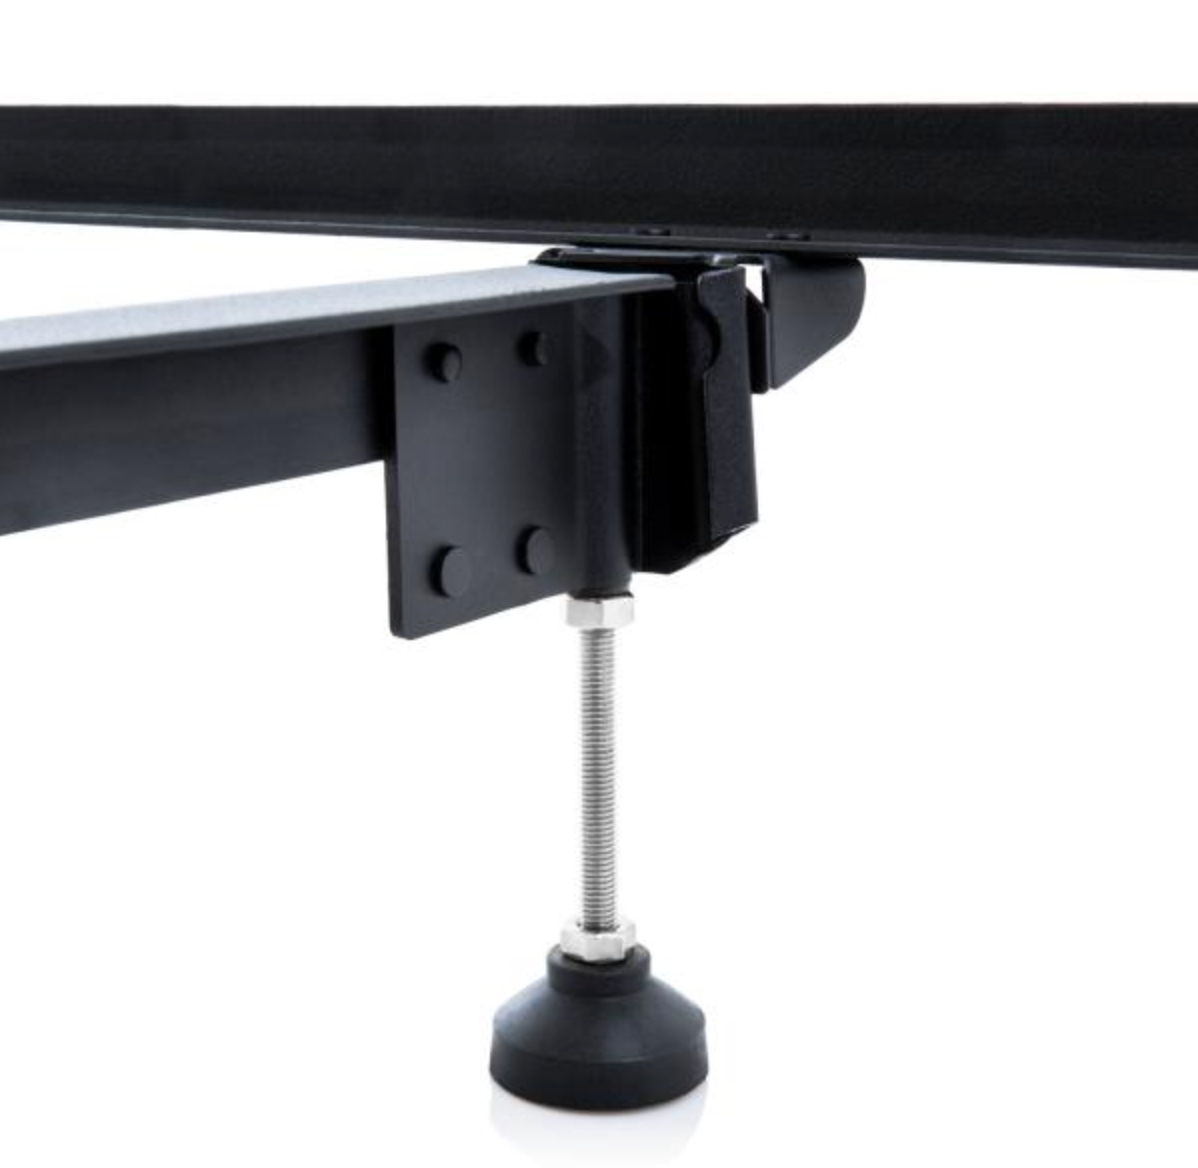 Steelock Bolt-On Headboard Footboard Bed Frame